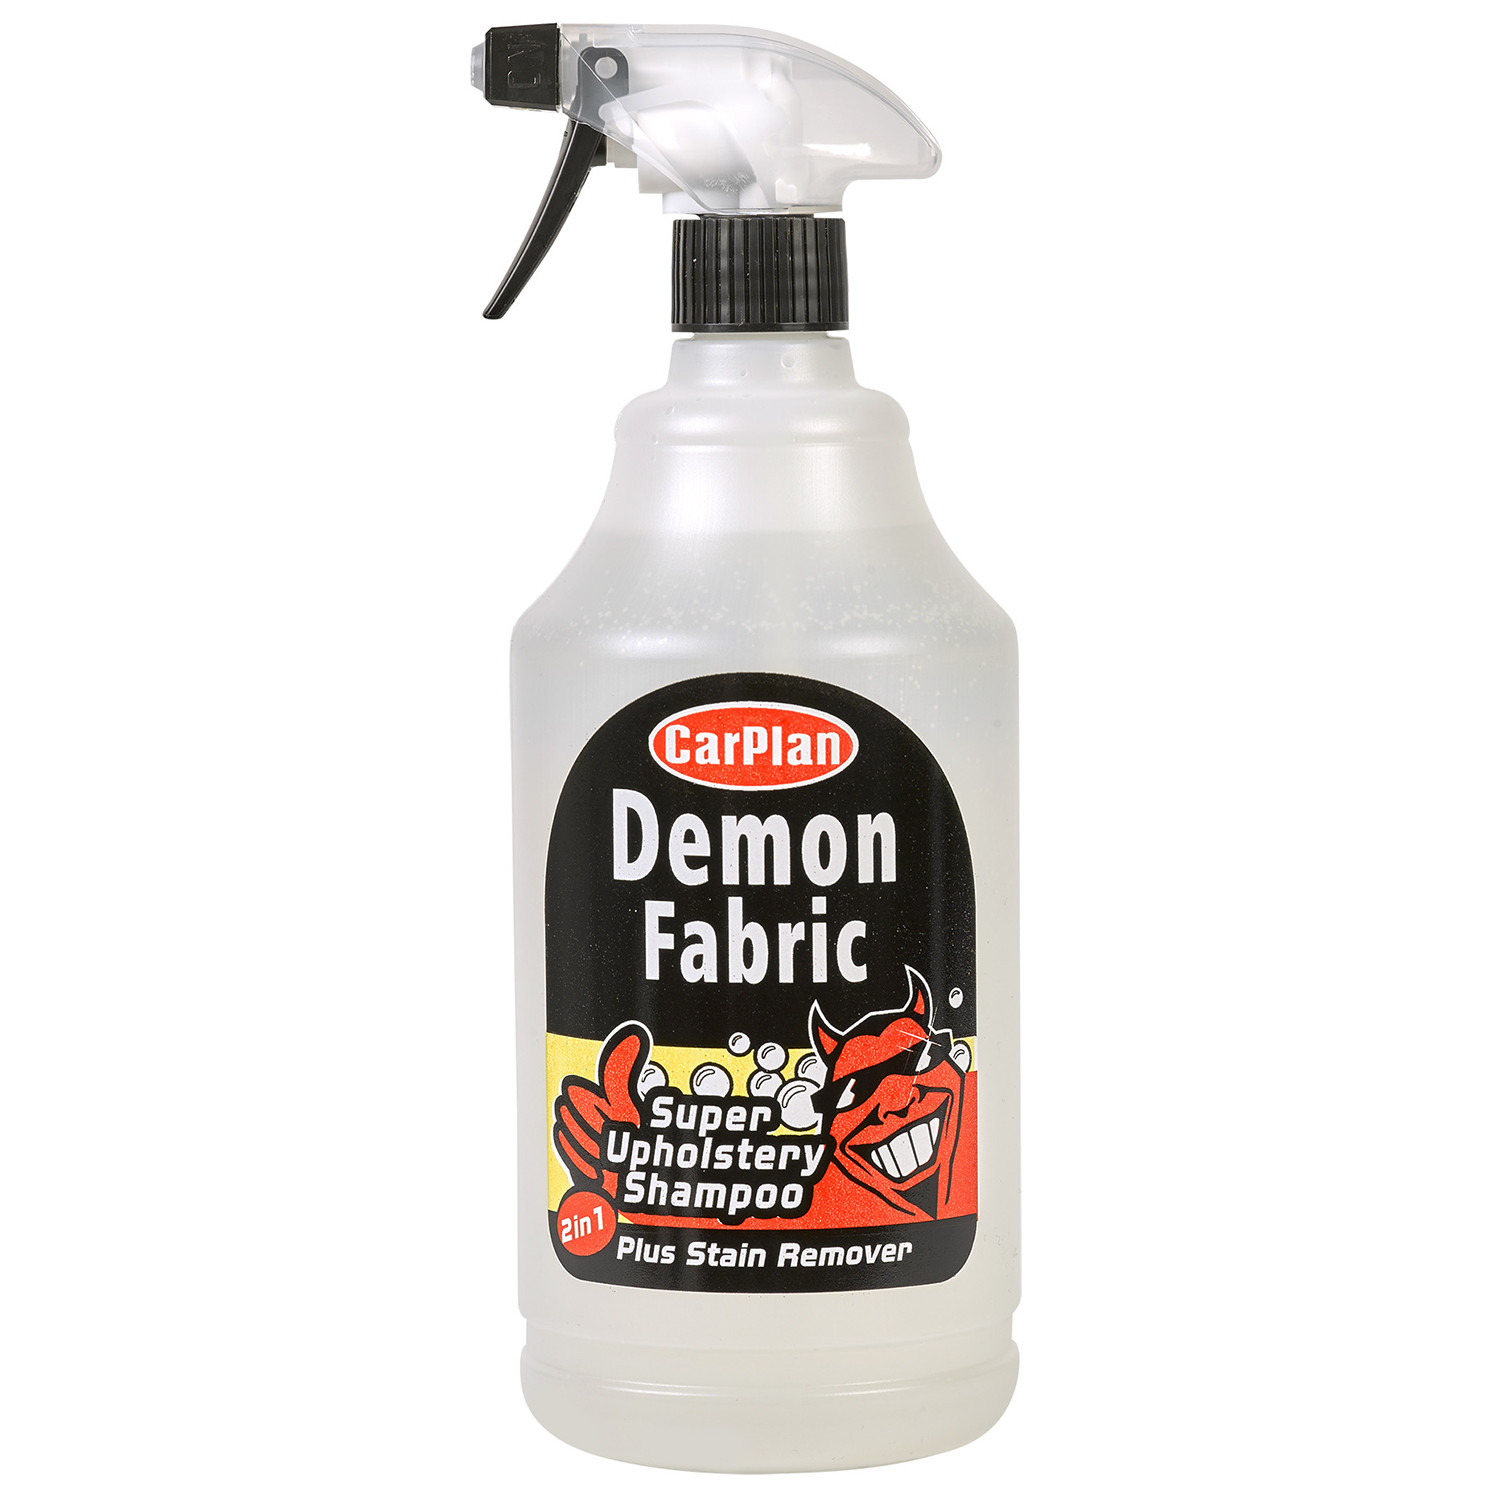 CarPlan Demon Fabric Upholstery Shampoo Image